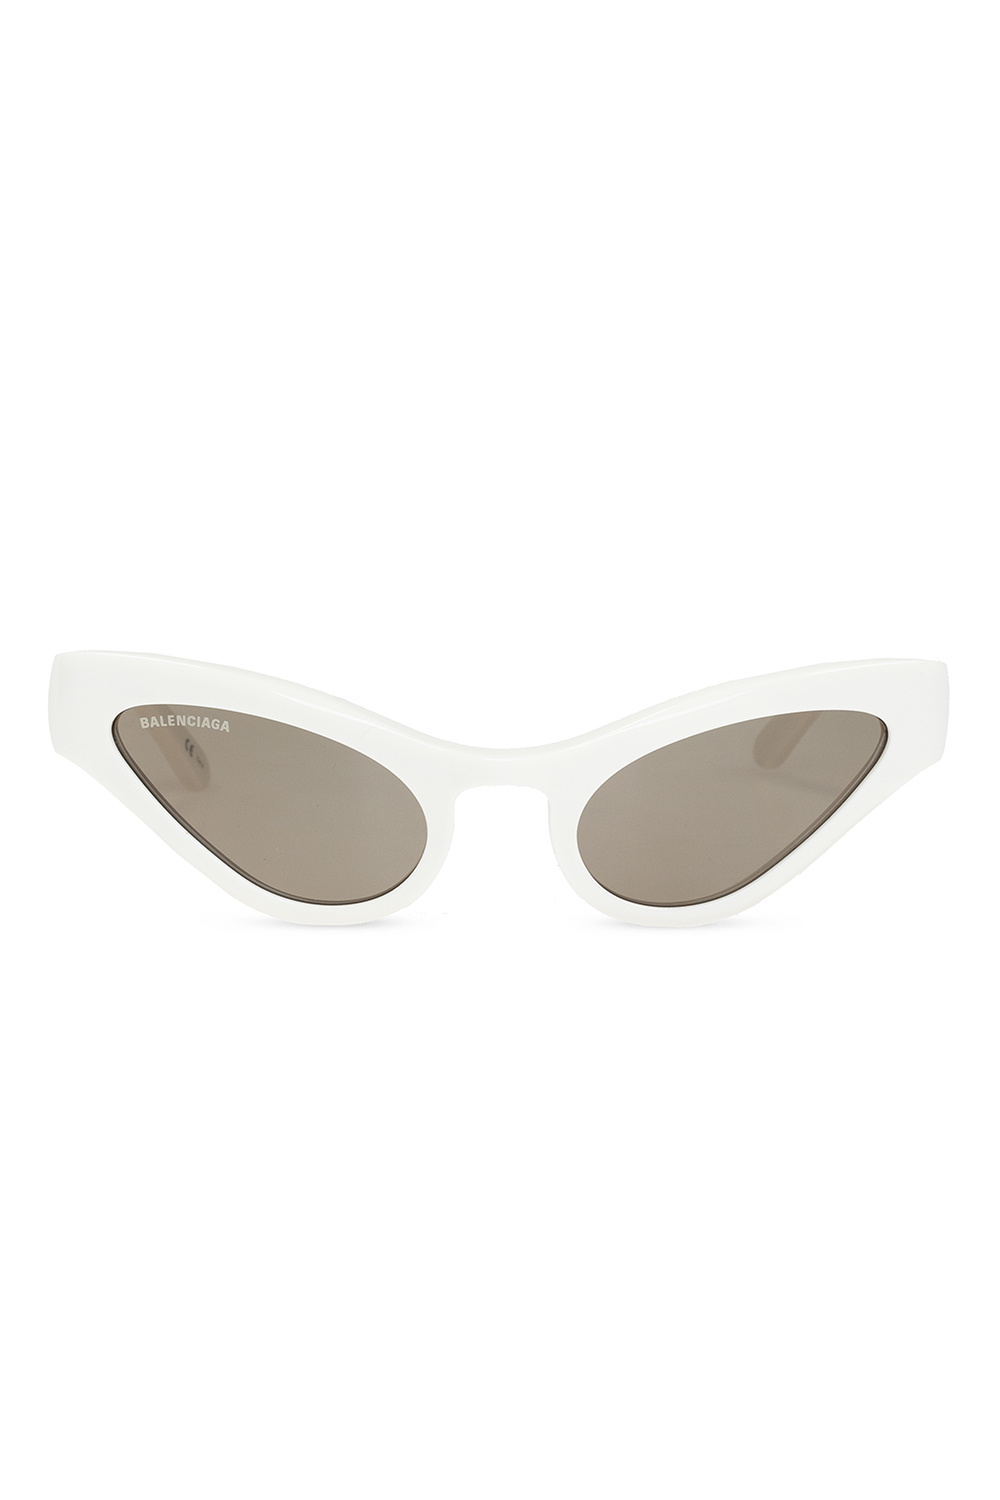 Balenciaga sunglasses Bvlgari with logo